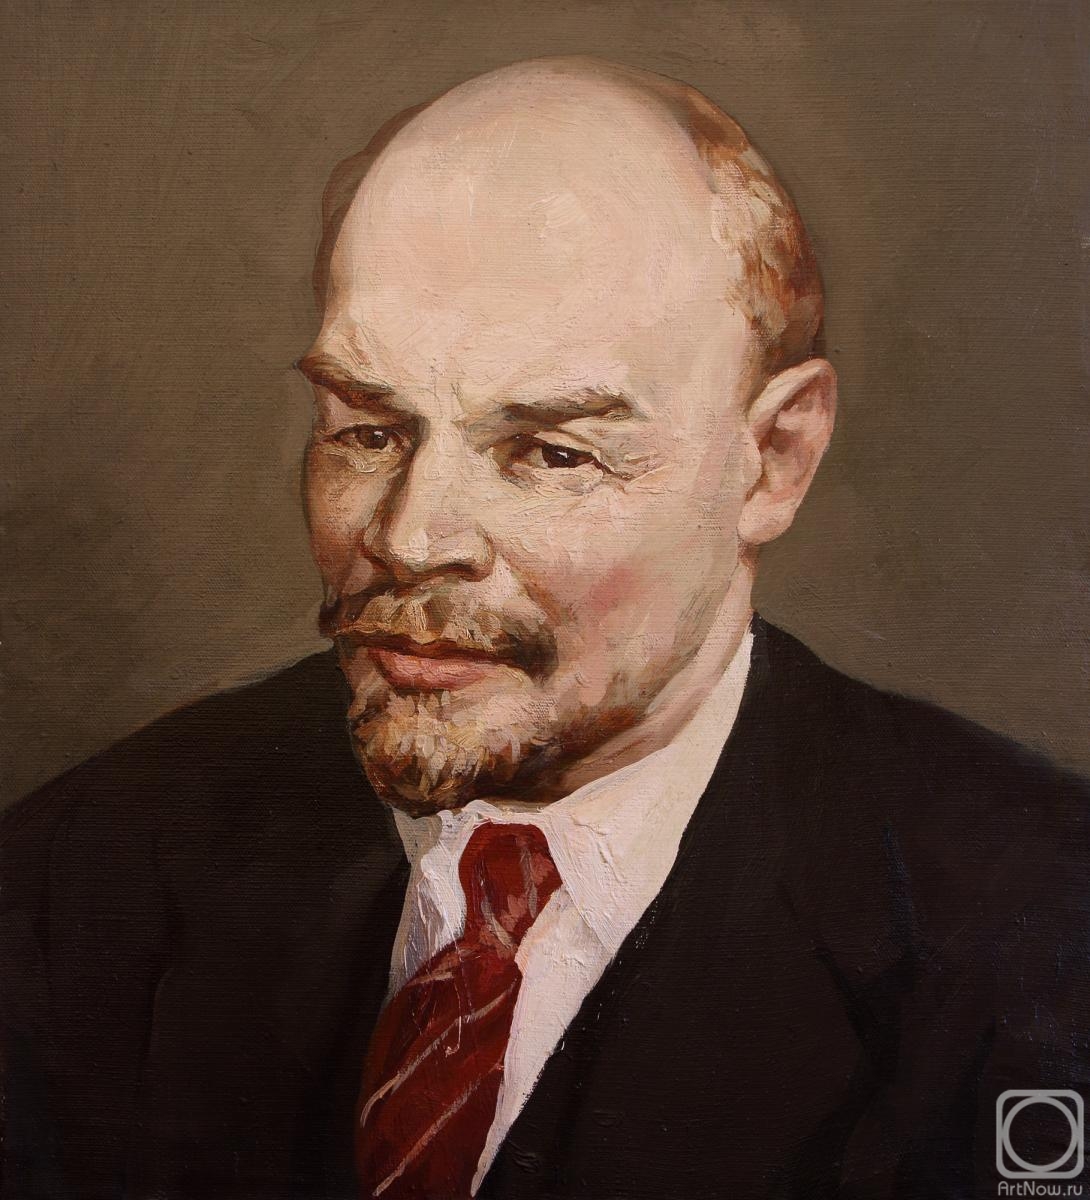 Orlov Gennady. Vladimir Lenin